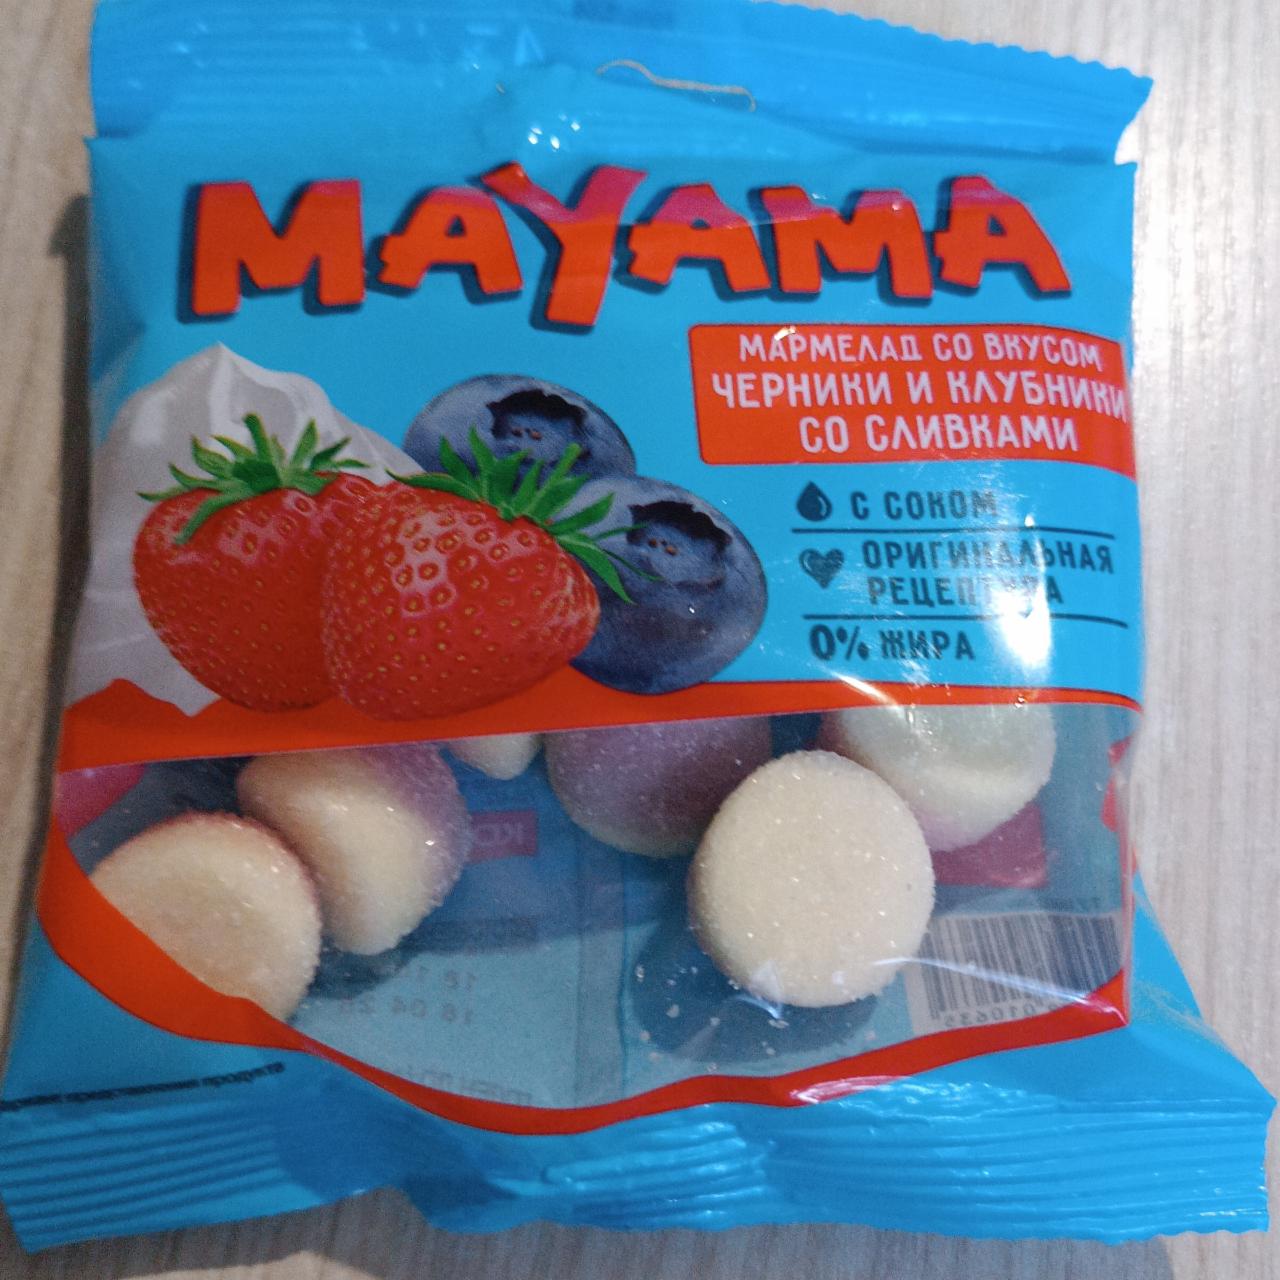 Фото - Жевательный мармелад Маяма со вкусом клубники со сливками, со вкусом черники со сливками Mayama